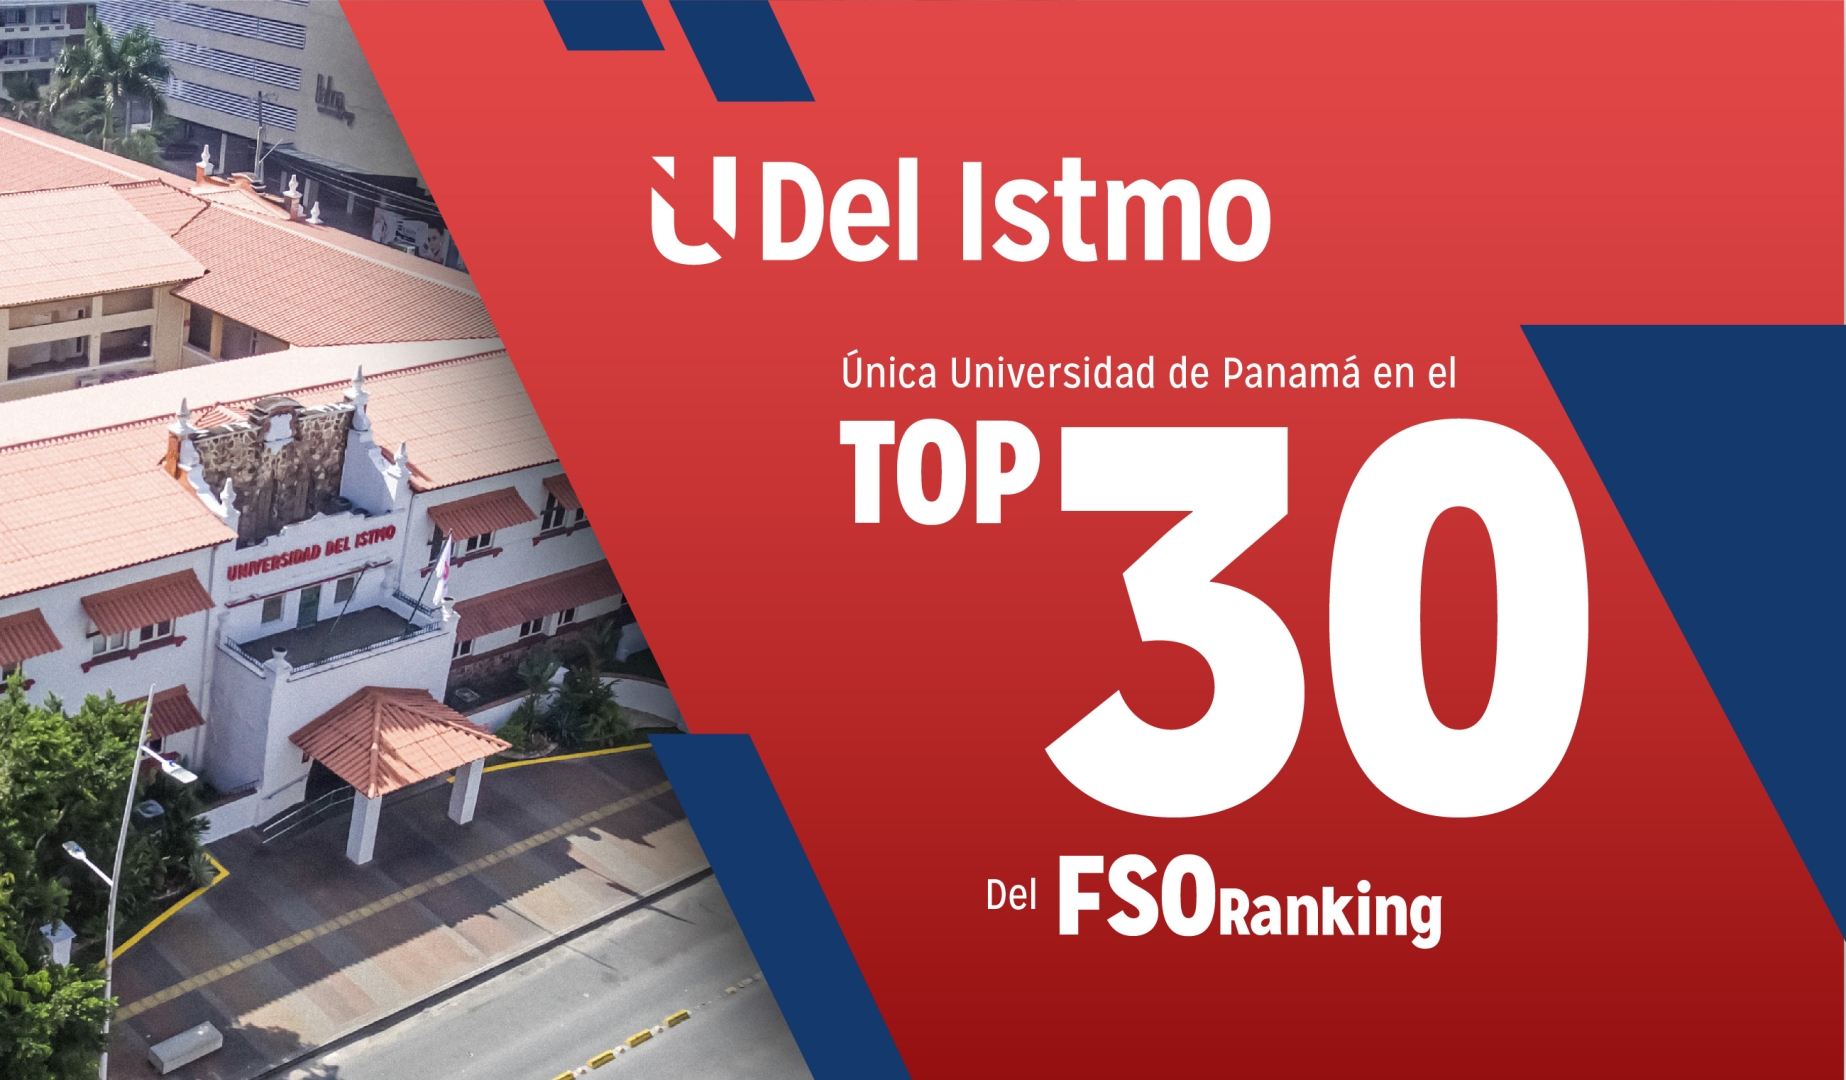 Ranking FSO U Del Istmo